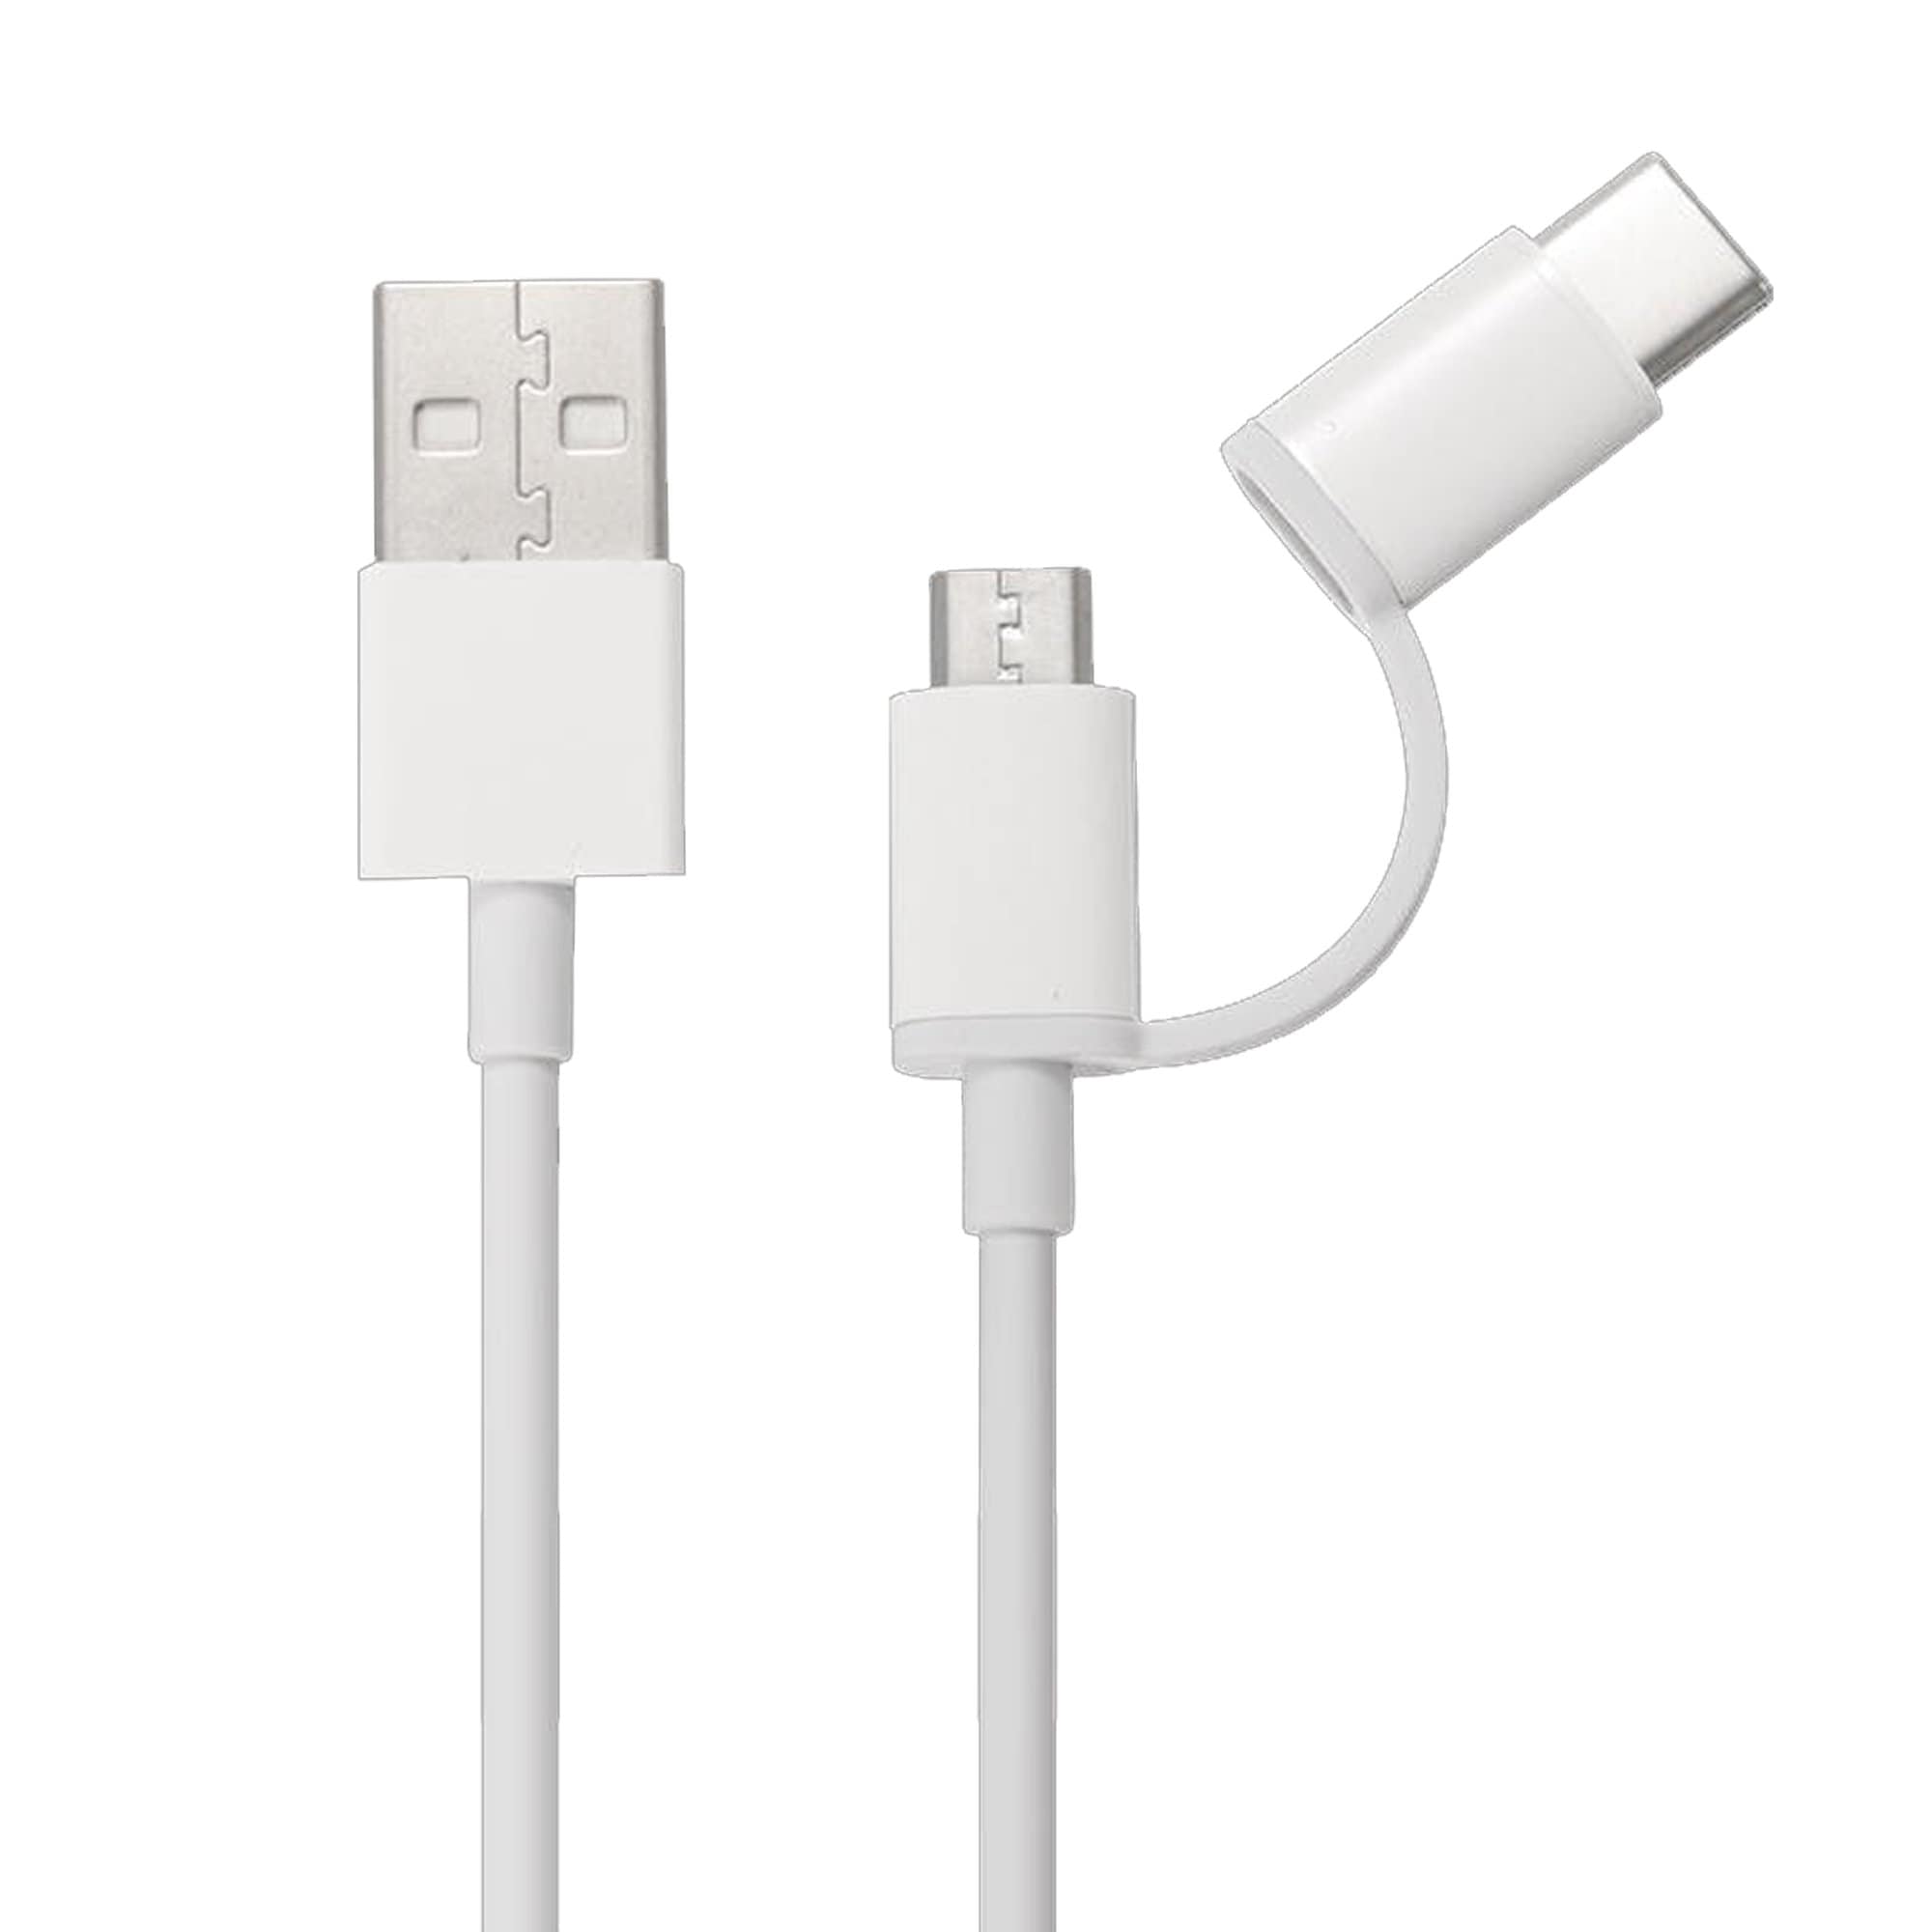 Cable Xiaomi Mi USB vers Micro USB + Type C 30cm (Blanc) à prix bas